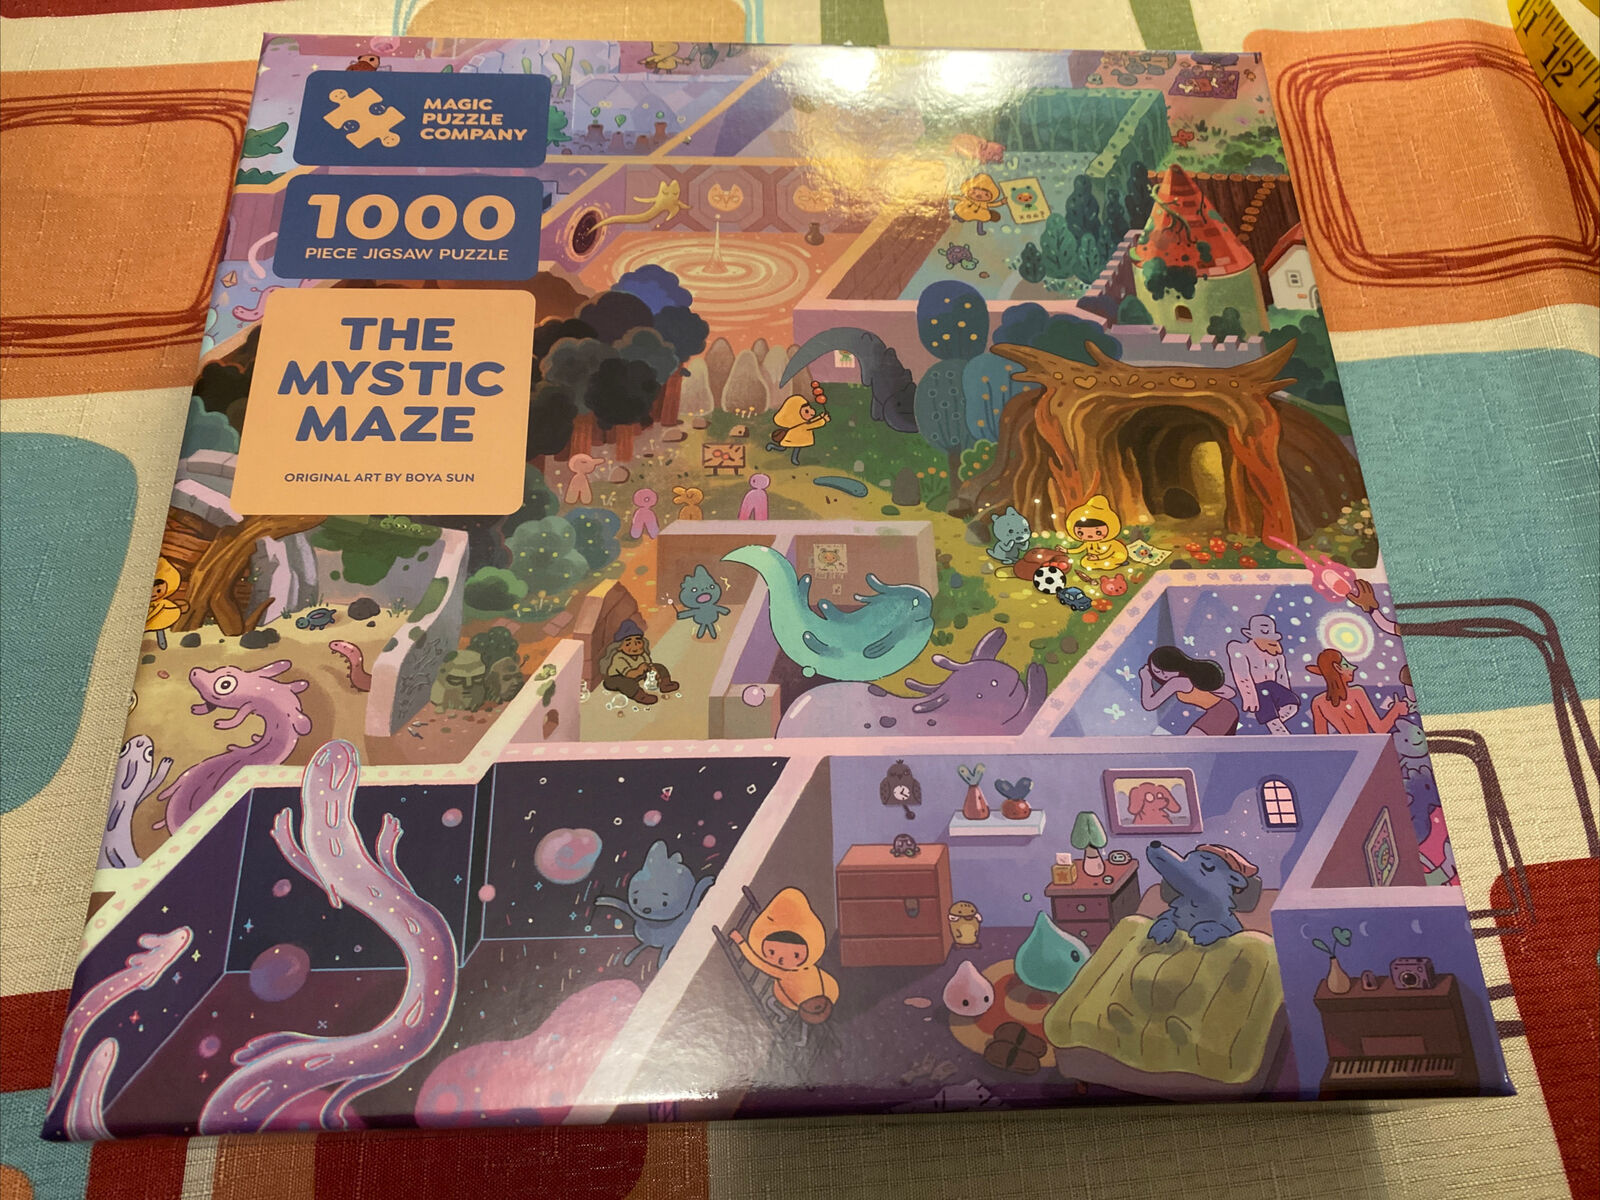 1000 Pieces Magic Puzzle Company The Mystic Maze Jigsaw Puzzle BGZ111372 for sale online 